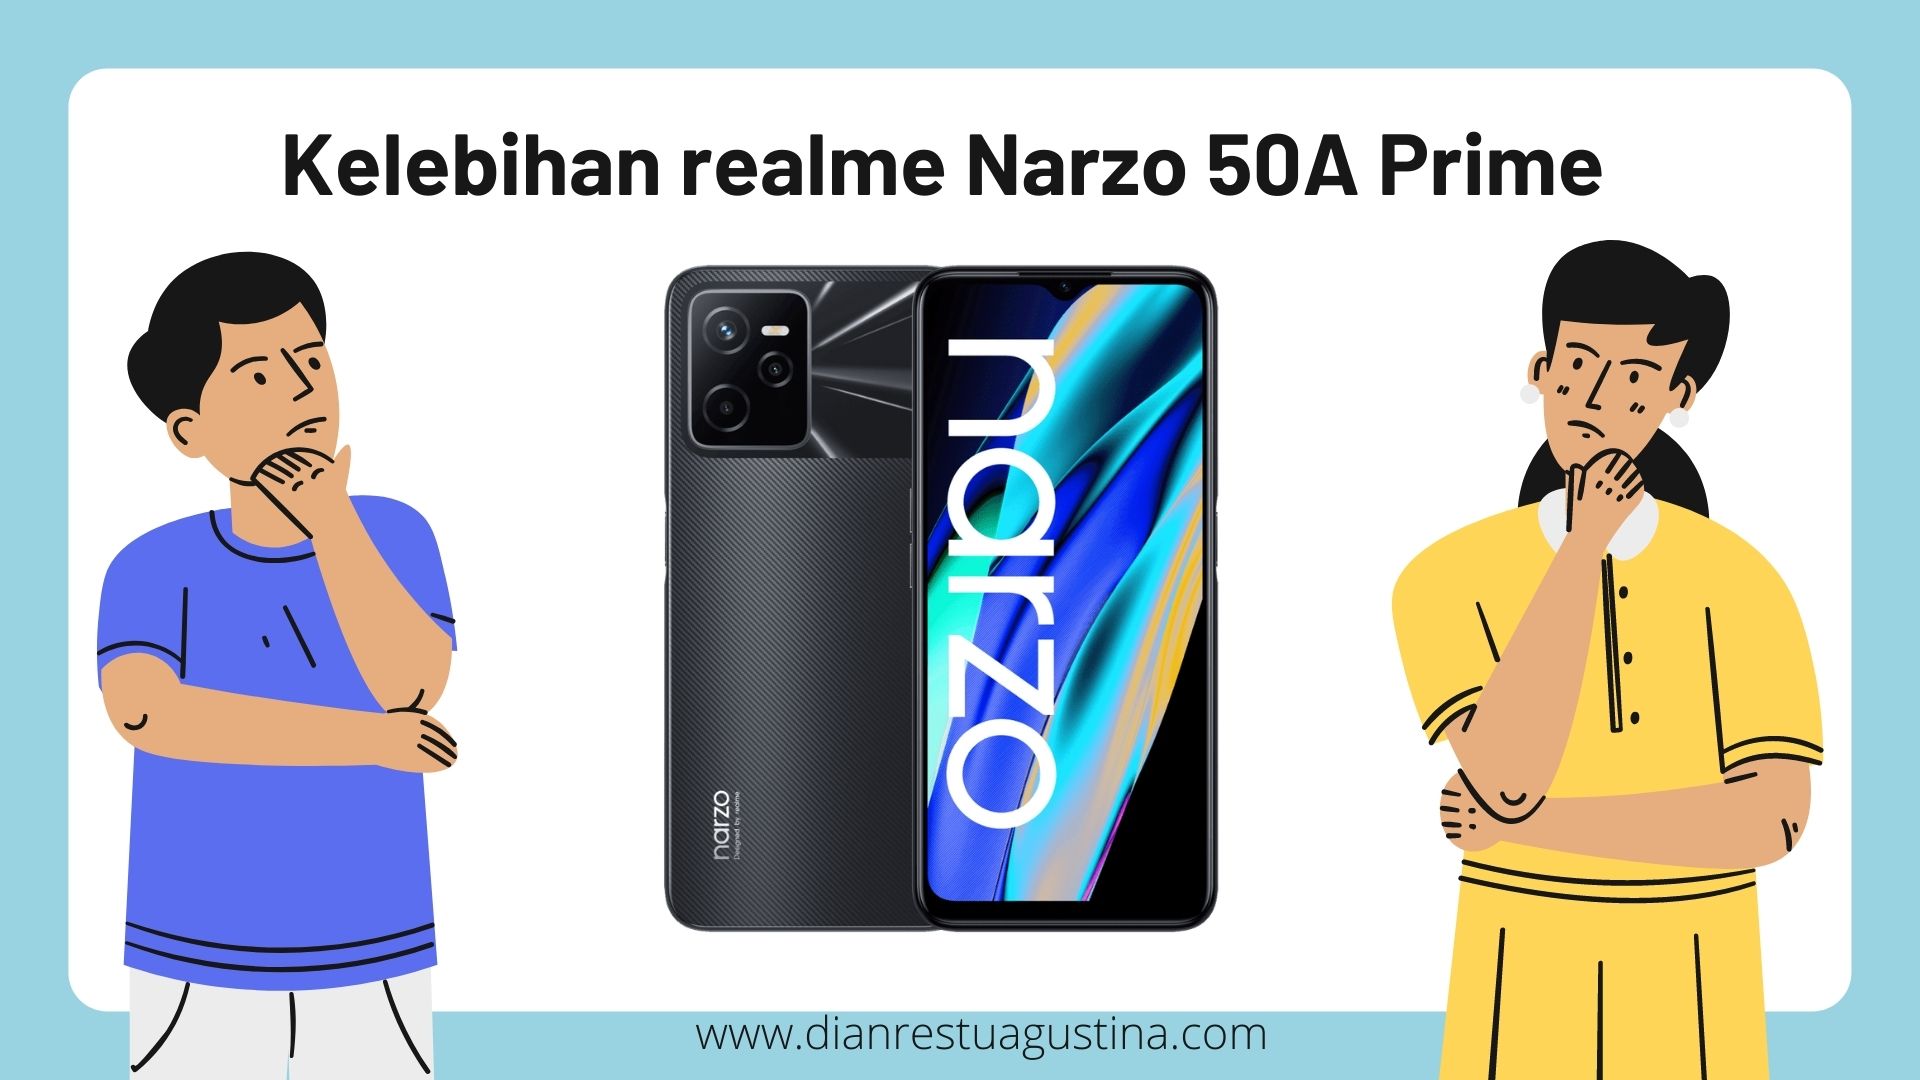 Kelebihan realme Narzo 50A Prime yang Pas Buat Kamu